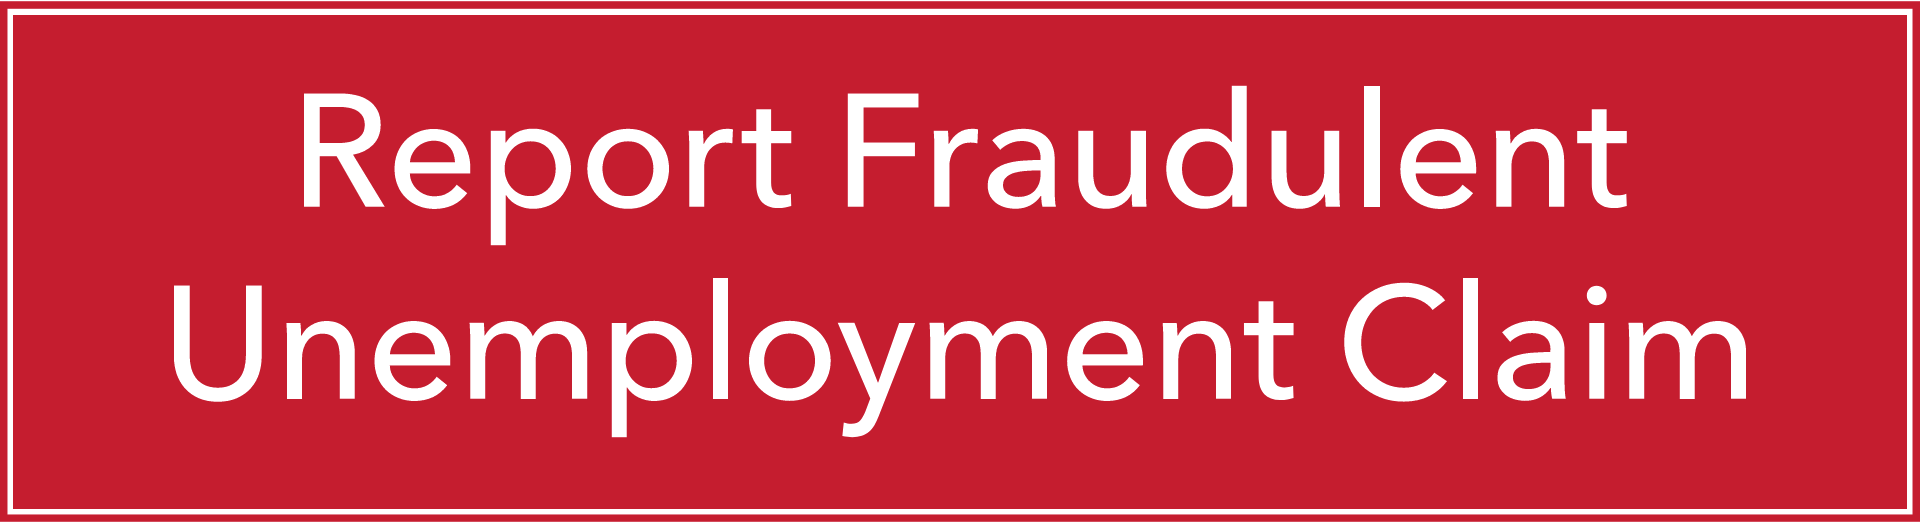 Report Fraudulent Unemployment Claim